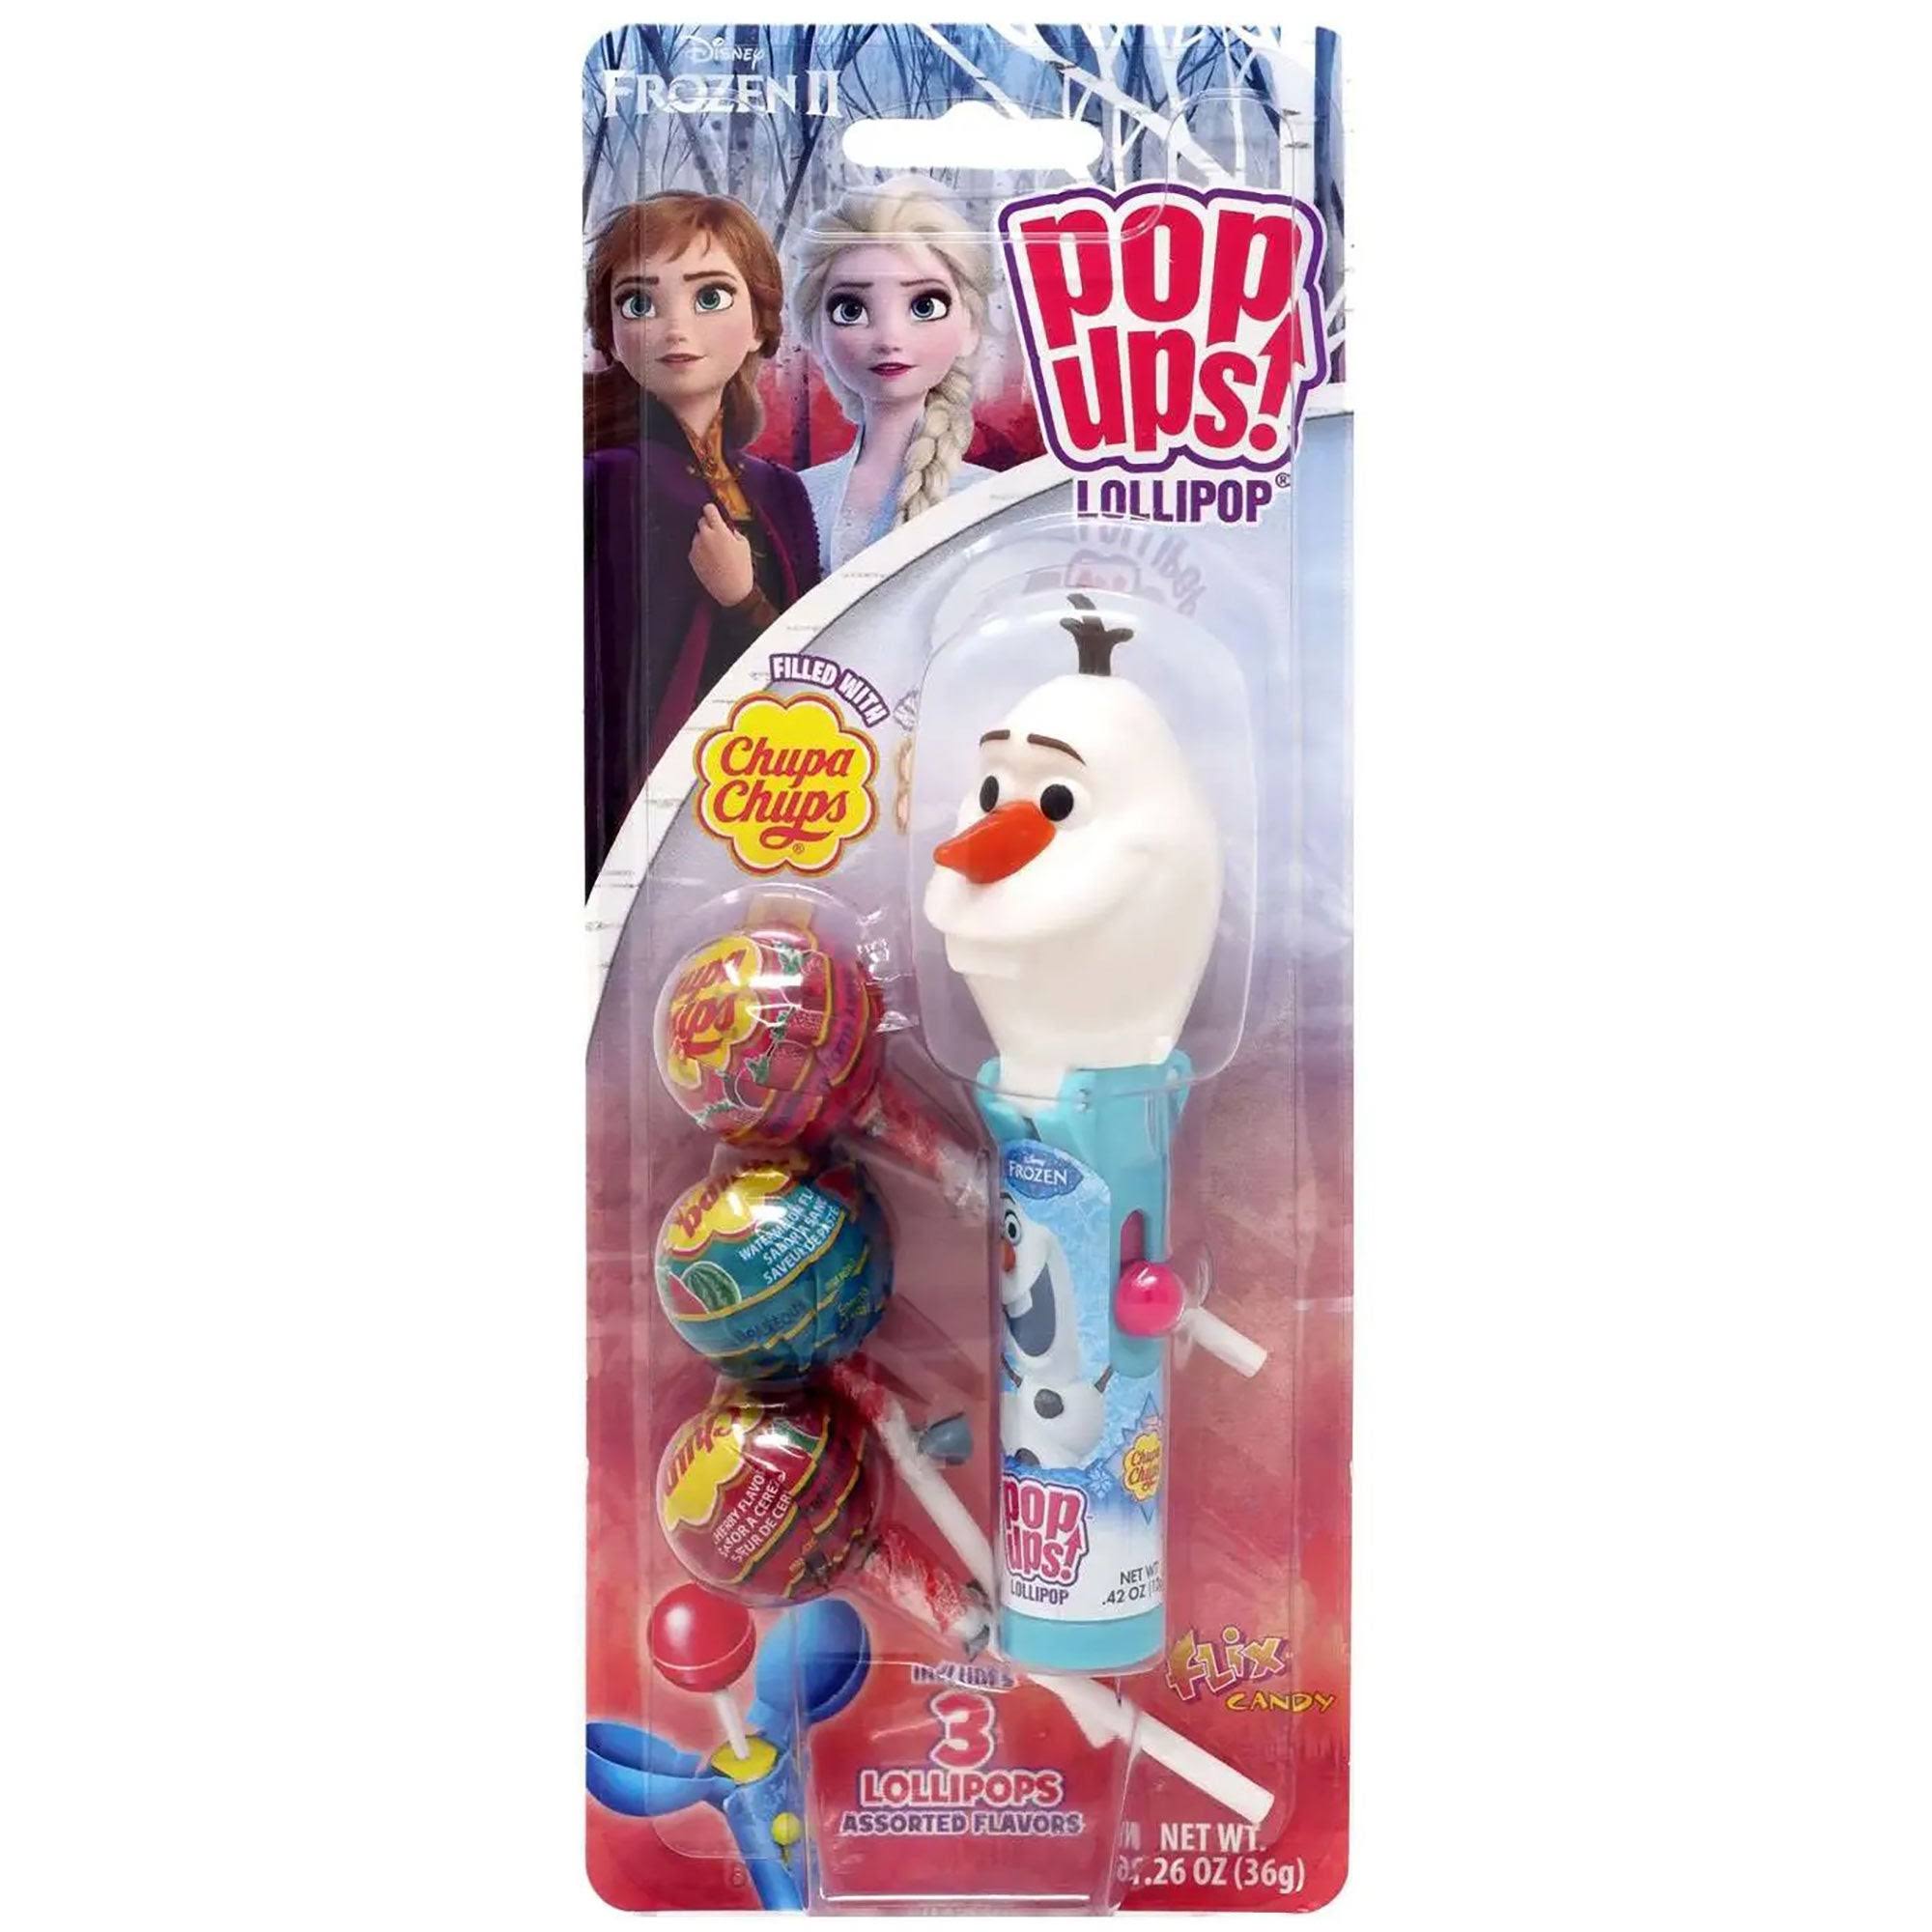 Chupa Chups Frozen Olaf Pop Ups Lollipop Holder